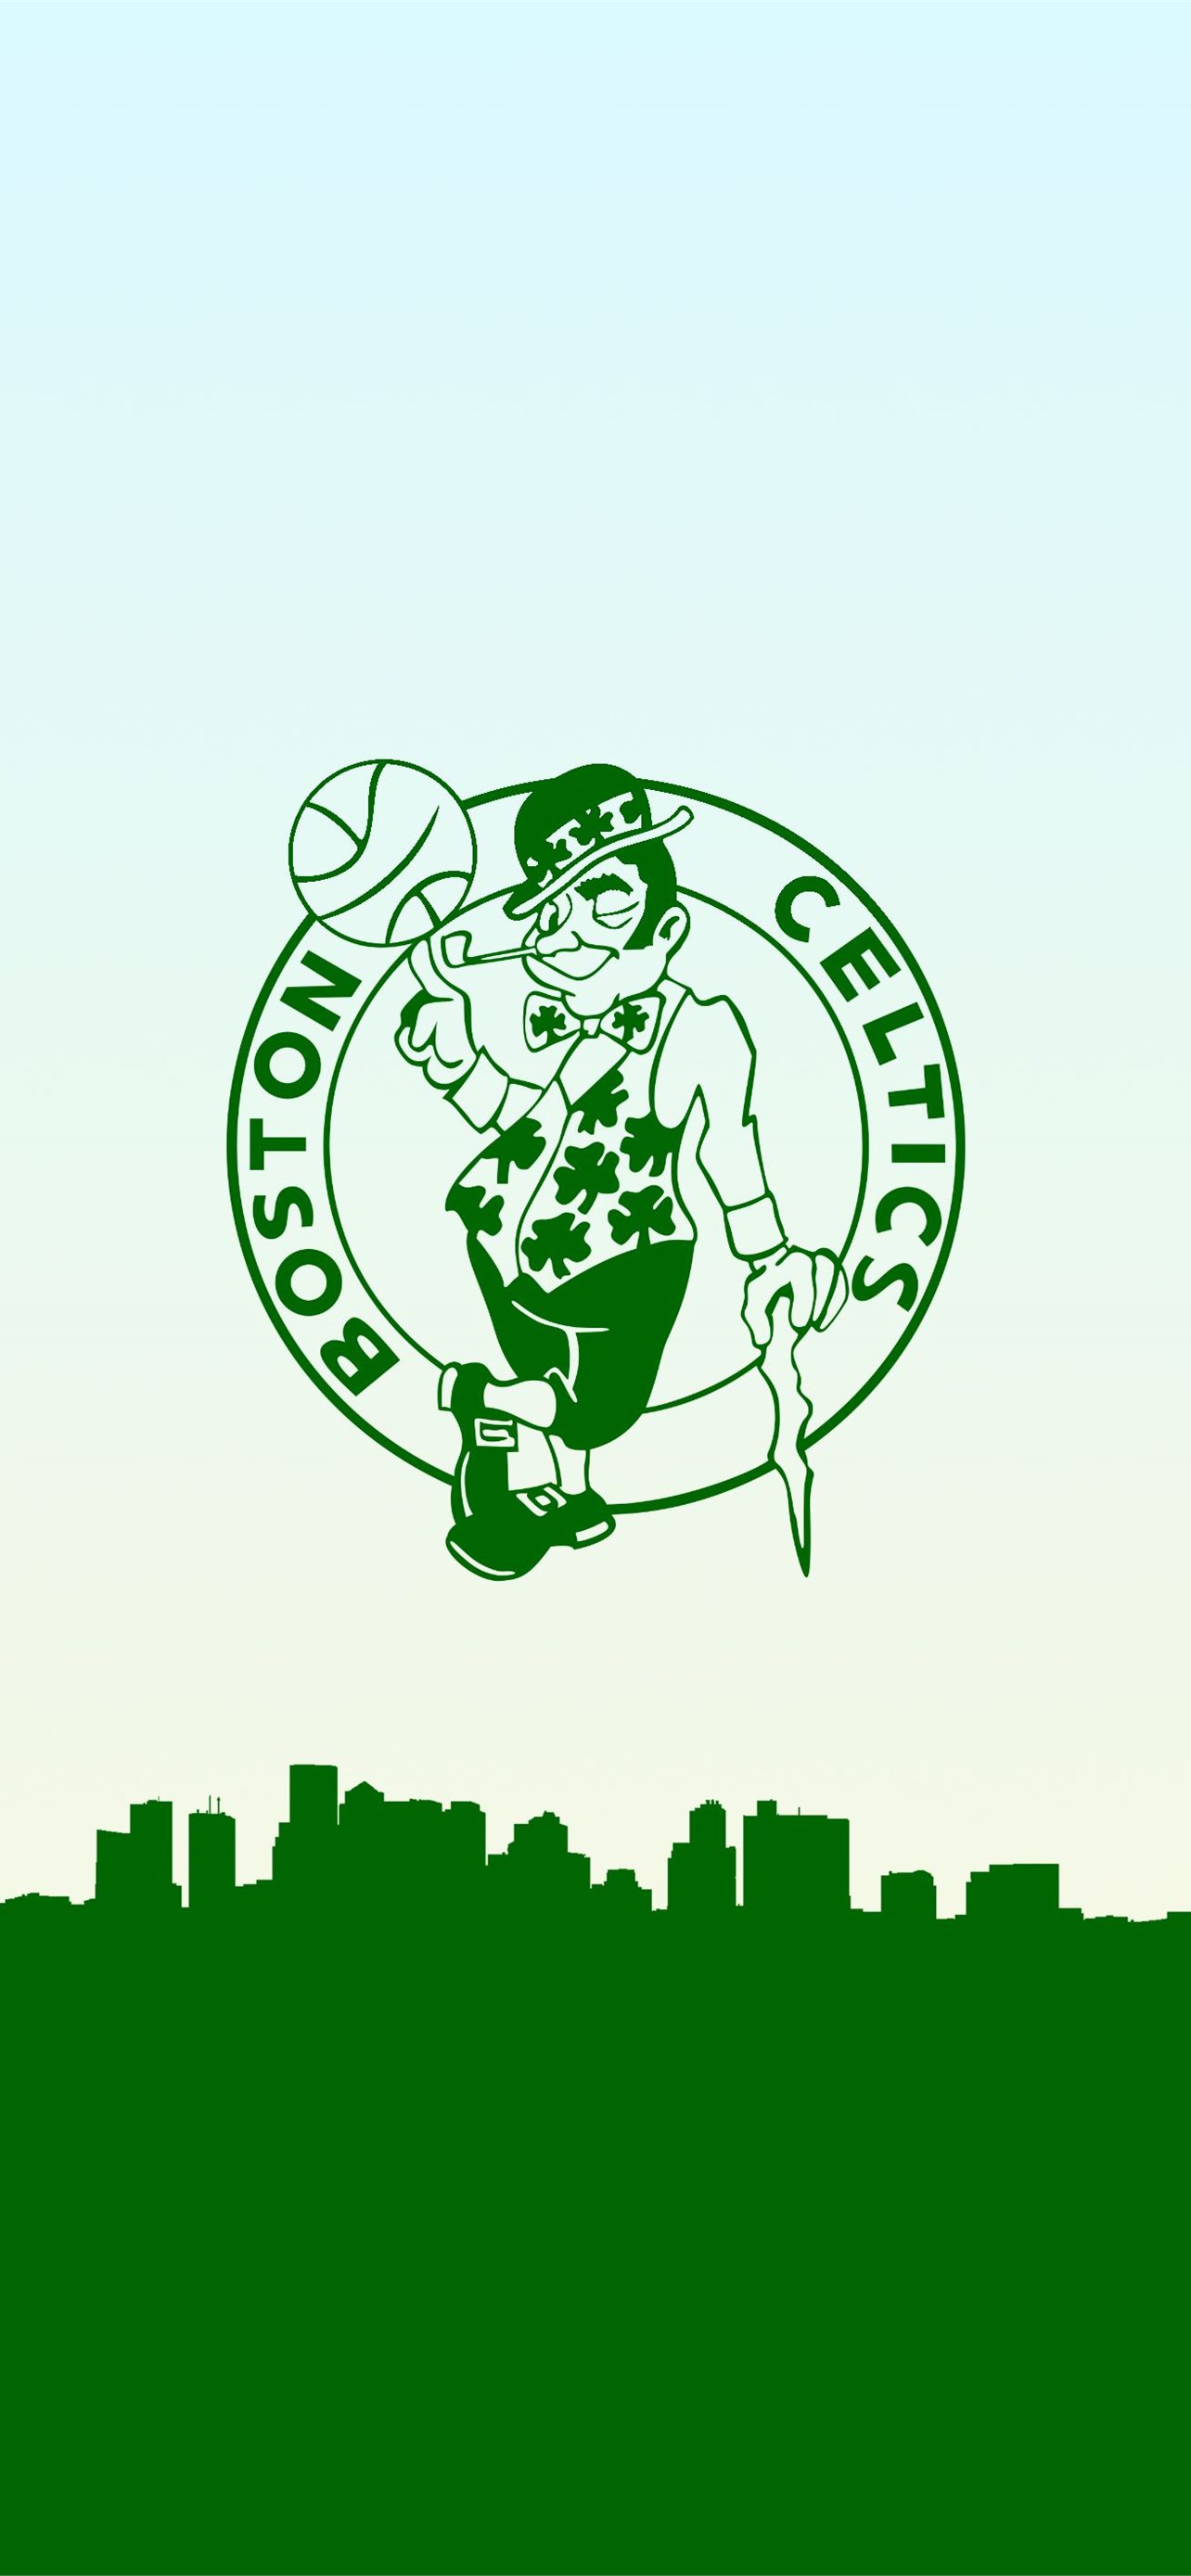 Boston Celtics phone wallpaper 1080P 2k 4k Full HD Wallpapers  Backgrounds Free Download  Wallpaper Crafter